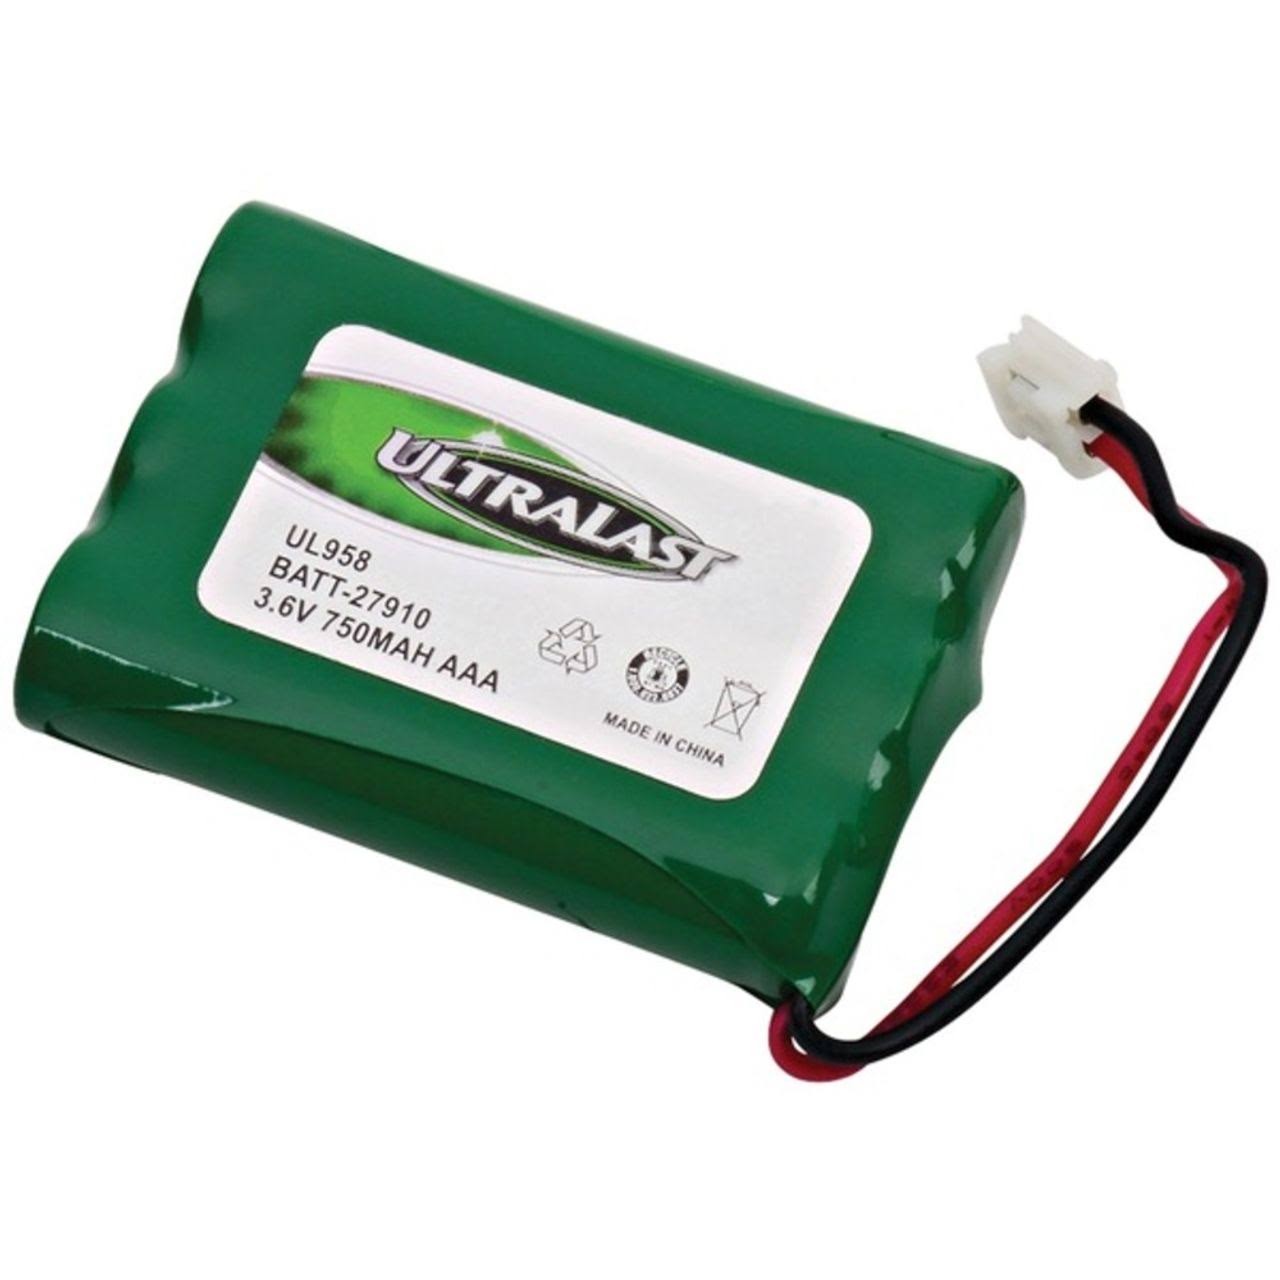 UltraLast UL-958 Cordless Phone Battery for Ge STB958 Dantona